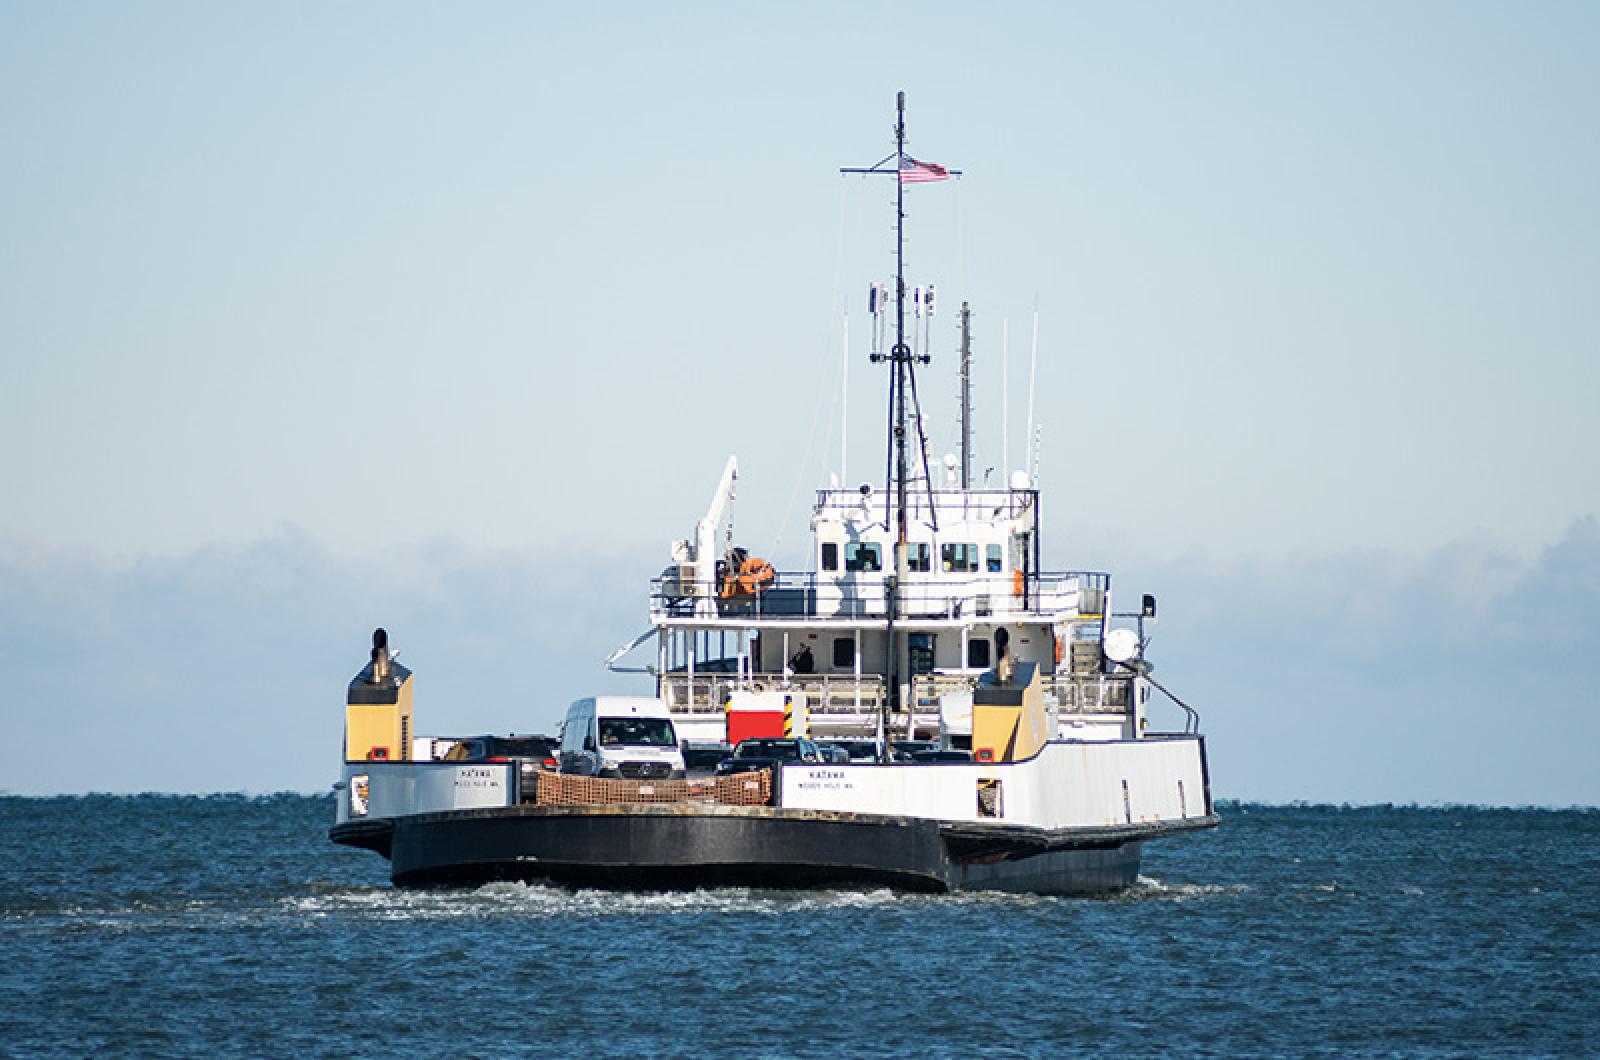 The Vineyard Gazette - Martha's Vineyard News  SSA Freight Boats Nearing  End of Useful Life, Marine Survey Finds